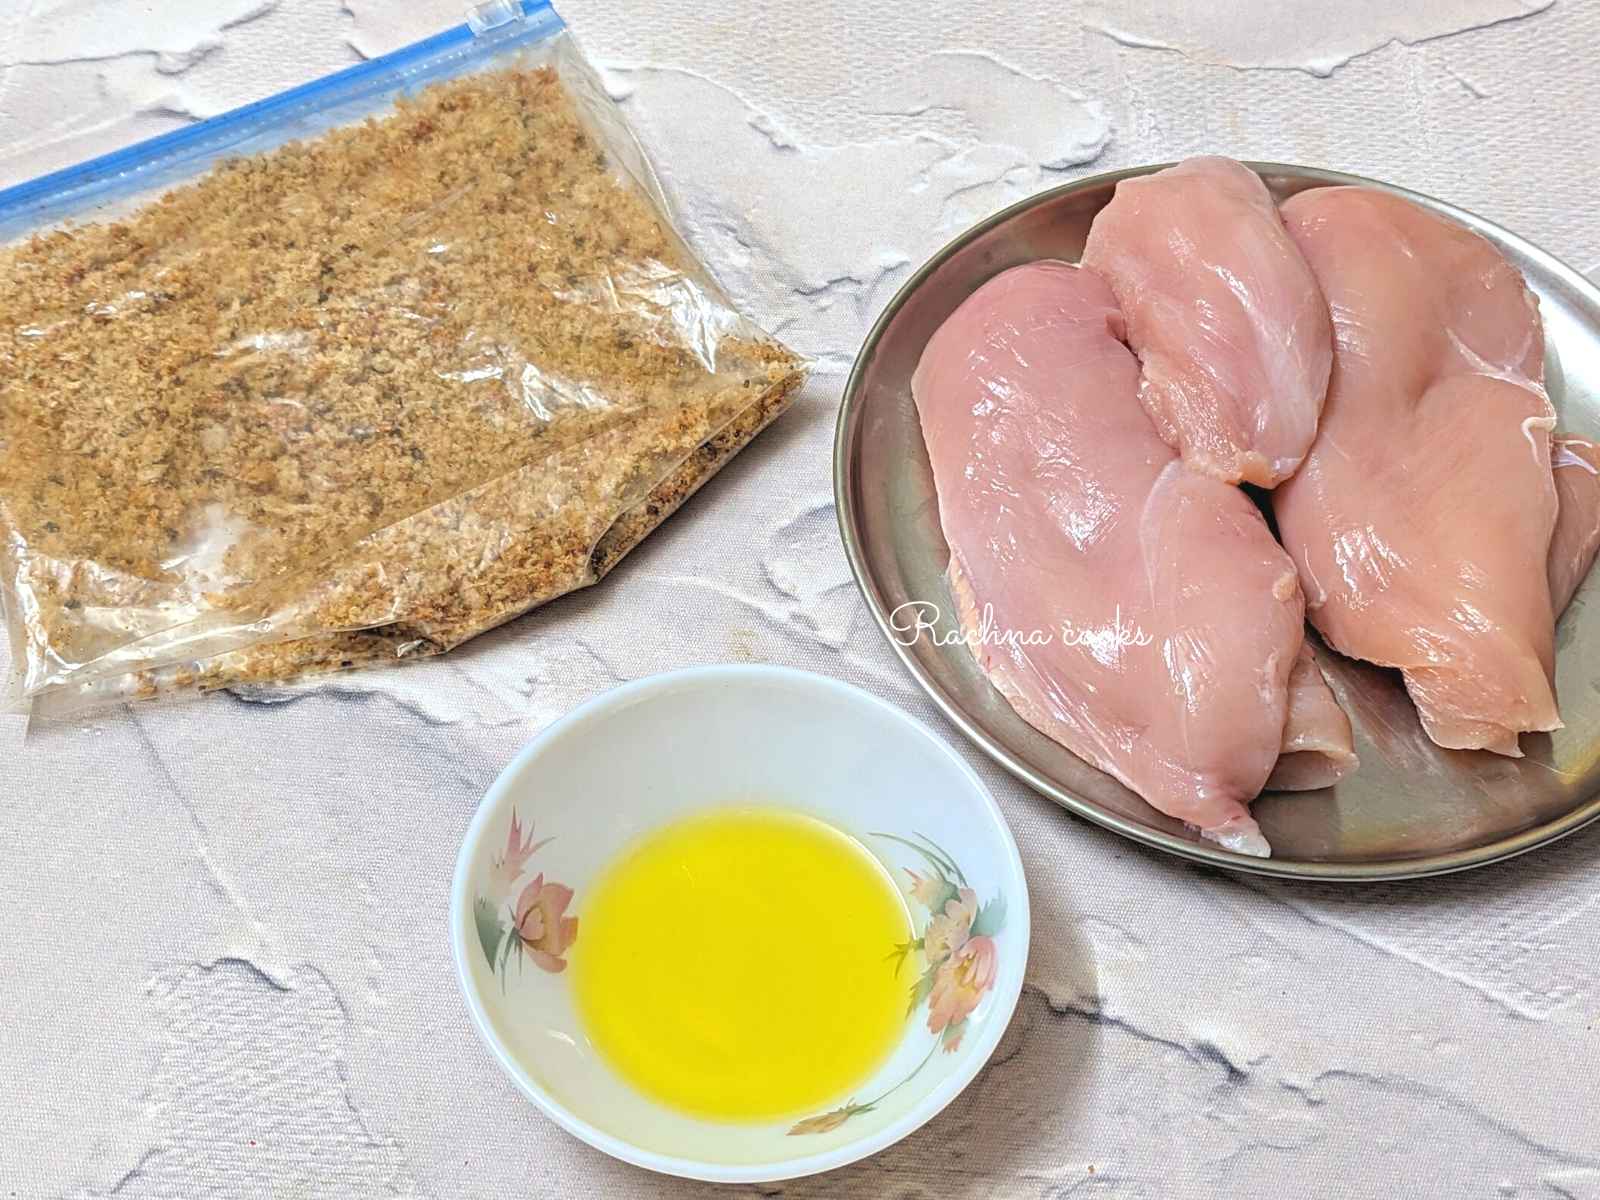 ingredients for making shake and bake chicken: chicken breasts, shake and bake and olive oil.